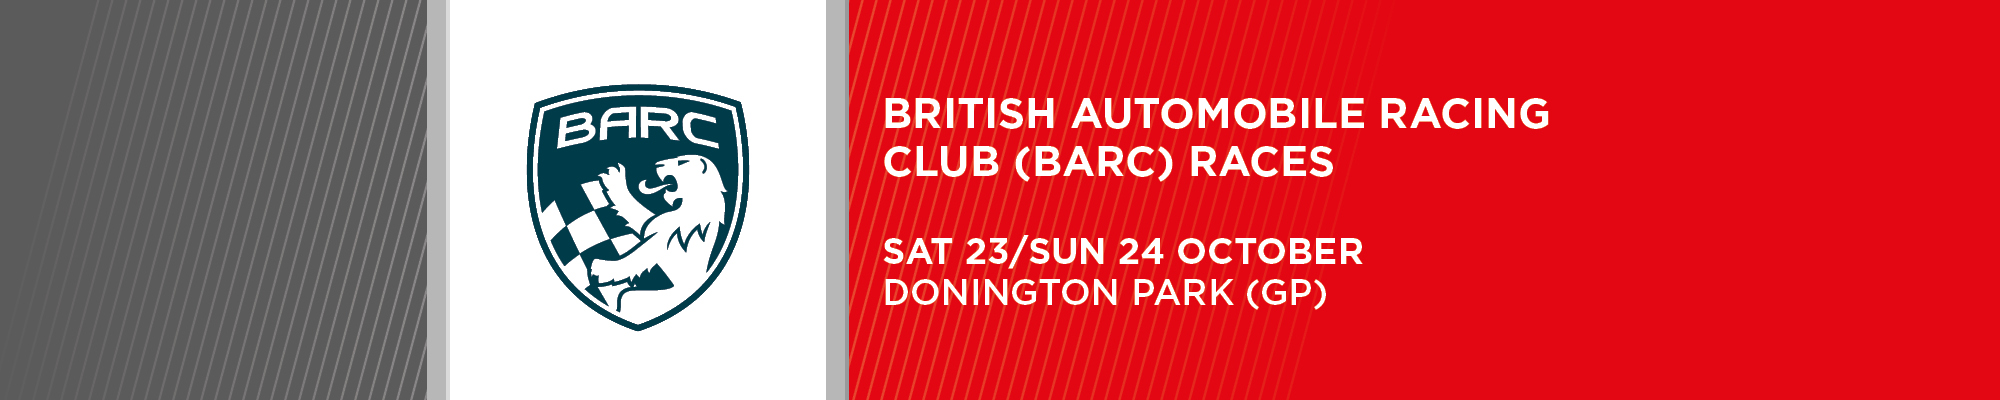 BARC Club Car Championships